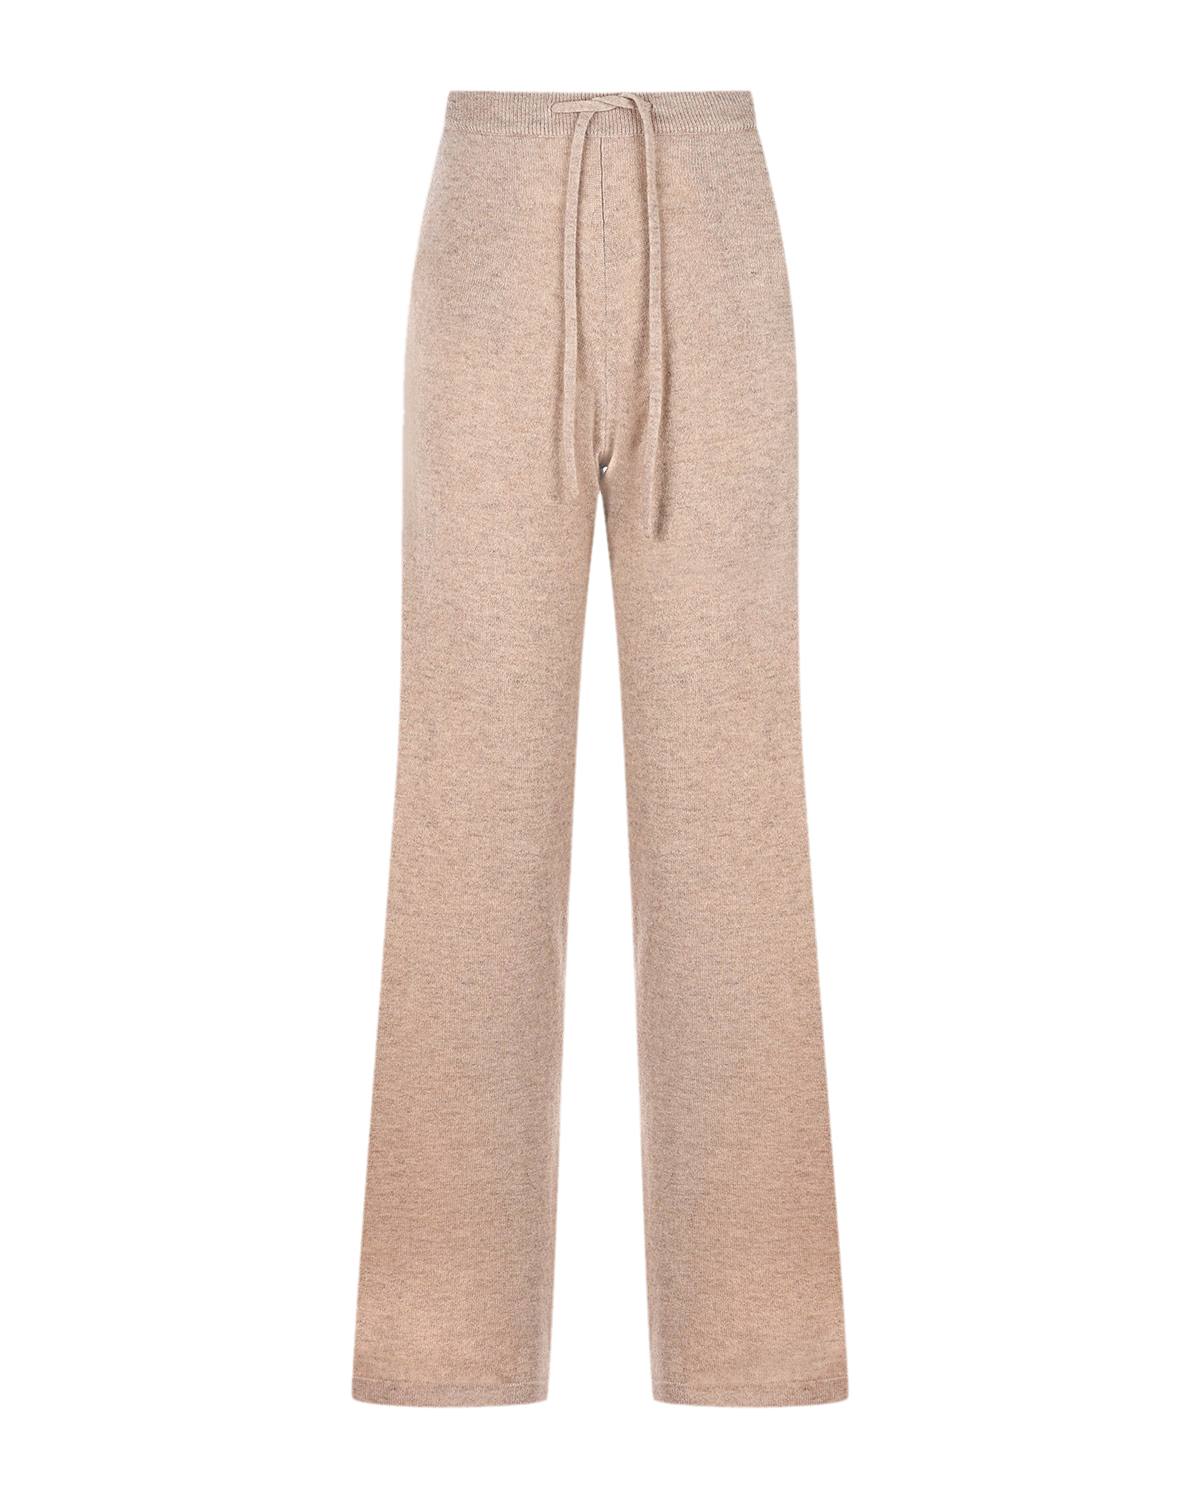 Бежевые брюки с поясом на кулиске Chinti&Parker, размер 38, цвет бежевый - фото 1